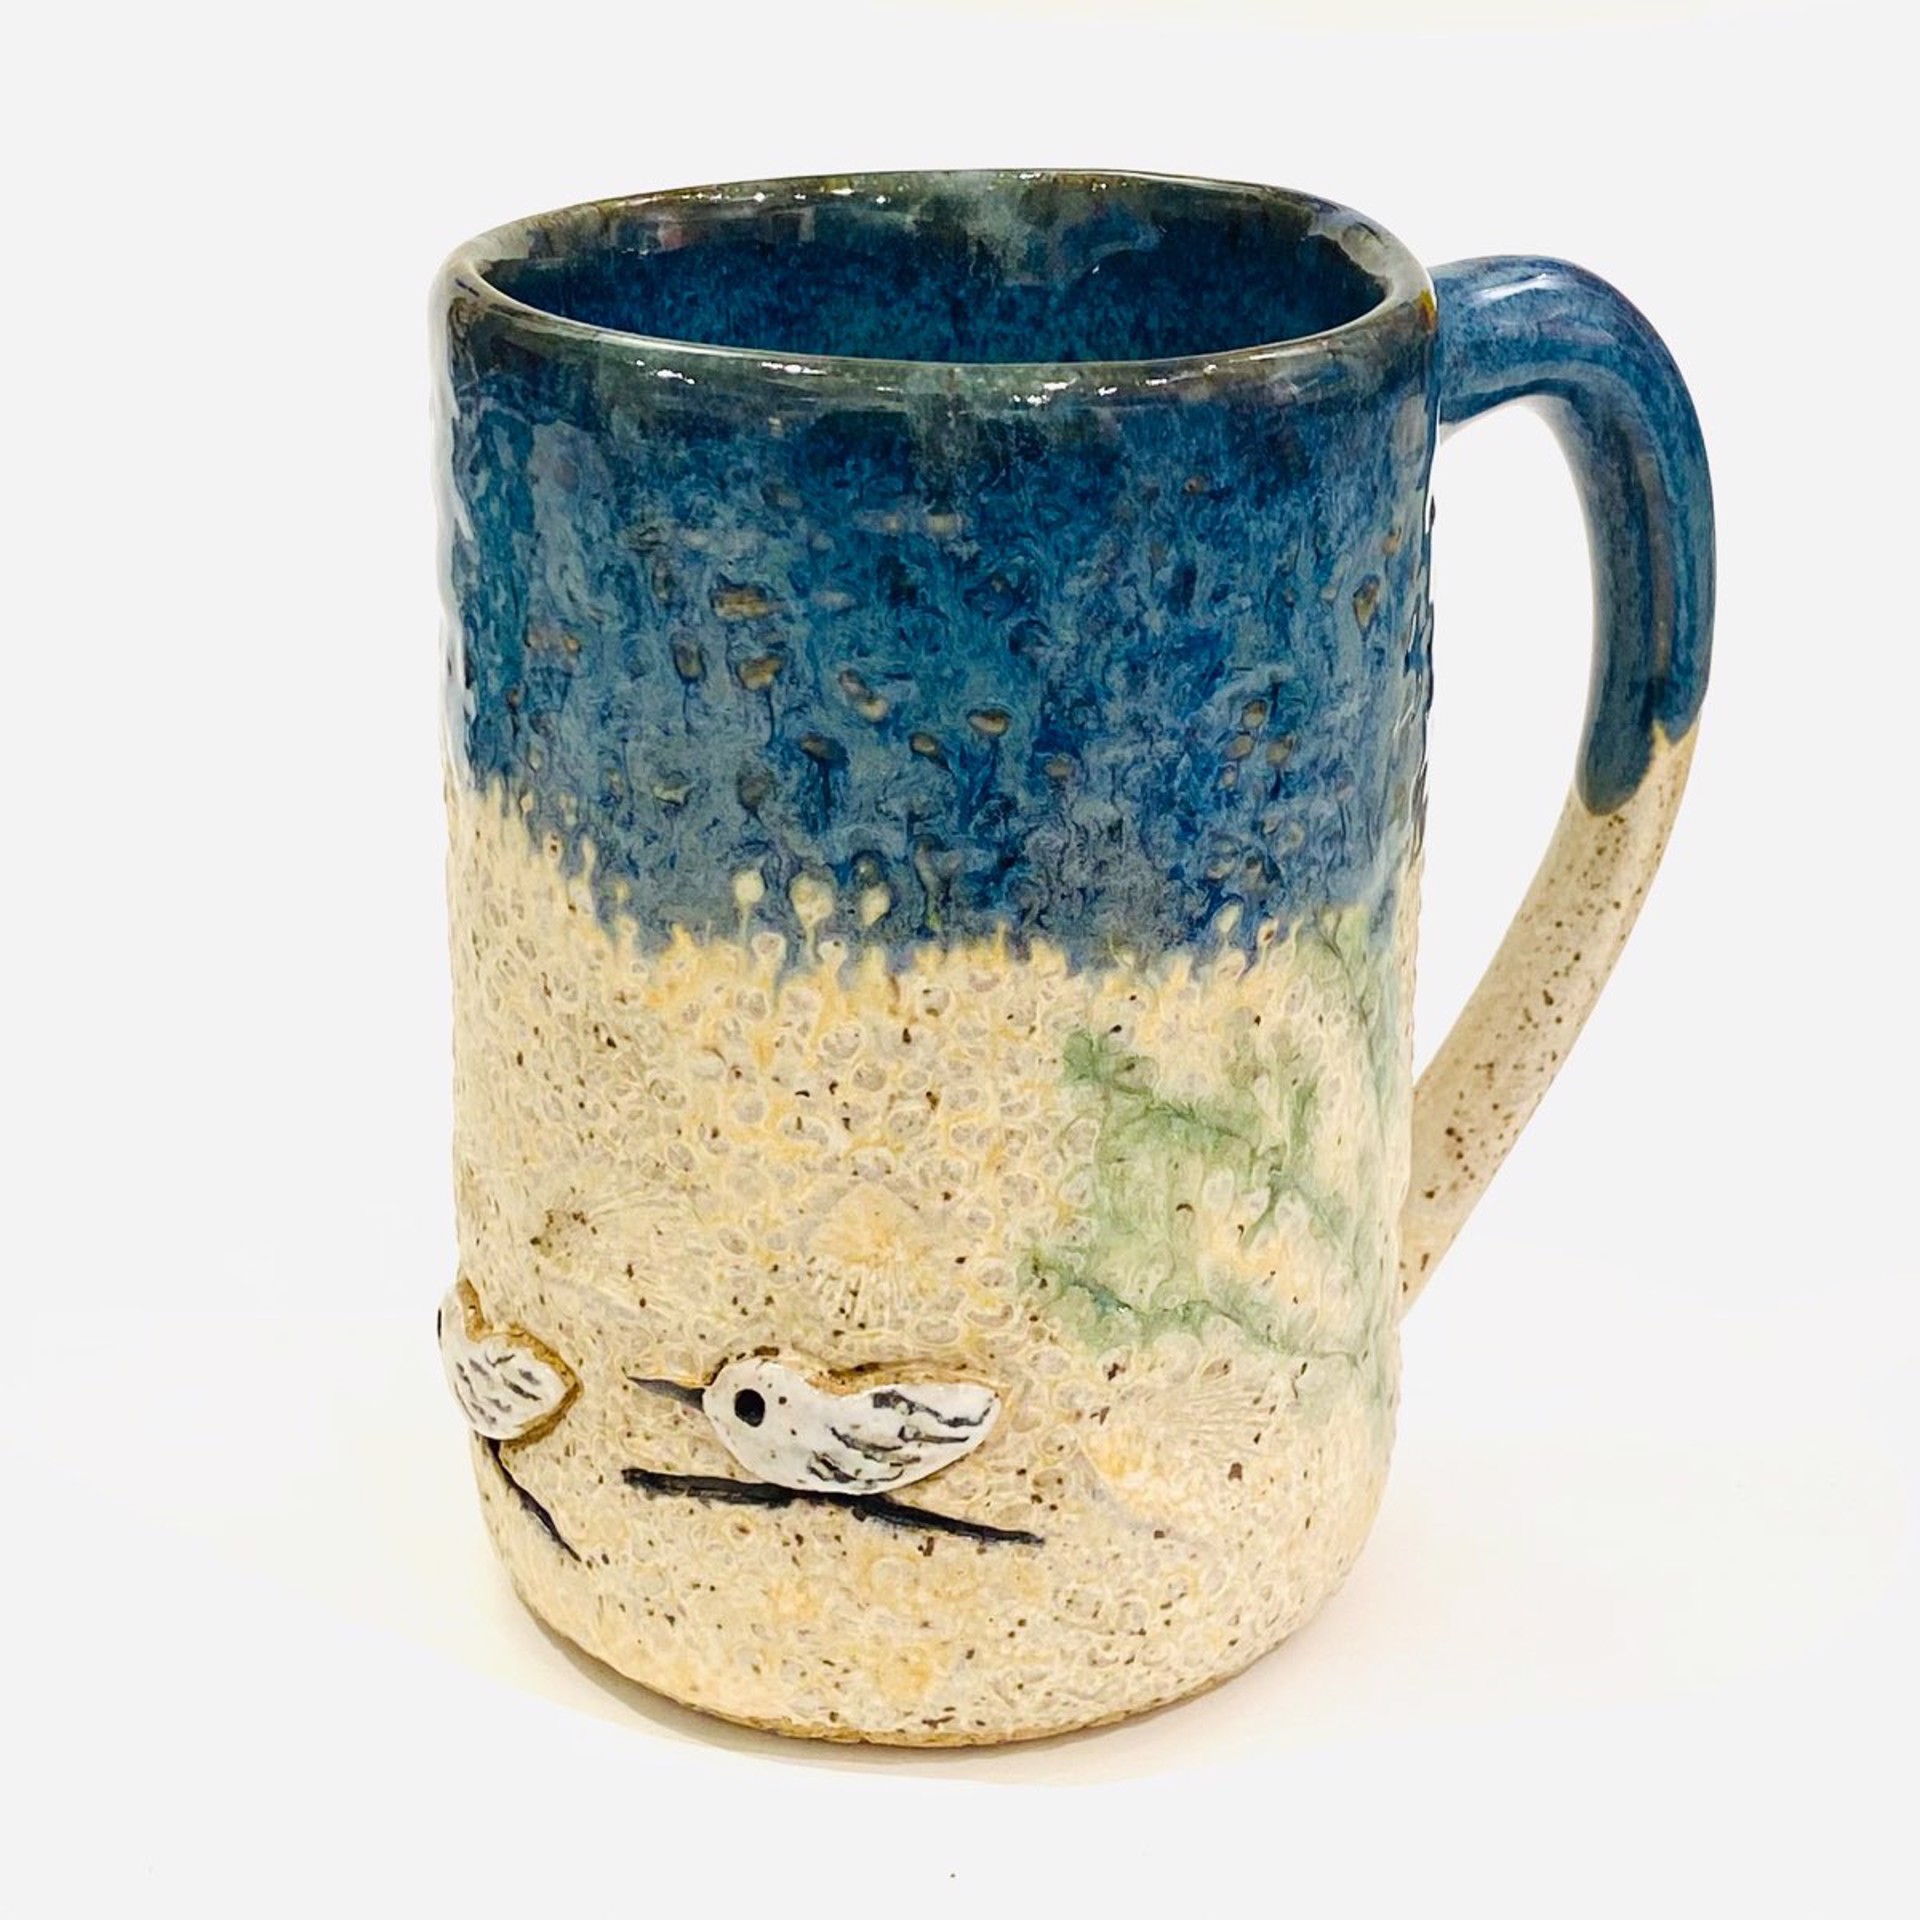 LG22-934 Mug with Sandpiper (Blue Glaze) by Jim & Steffi Logan